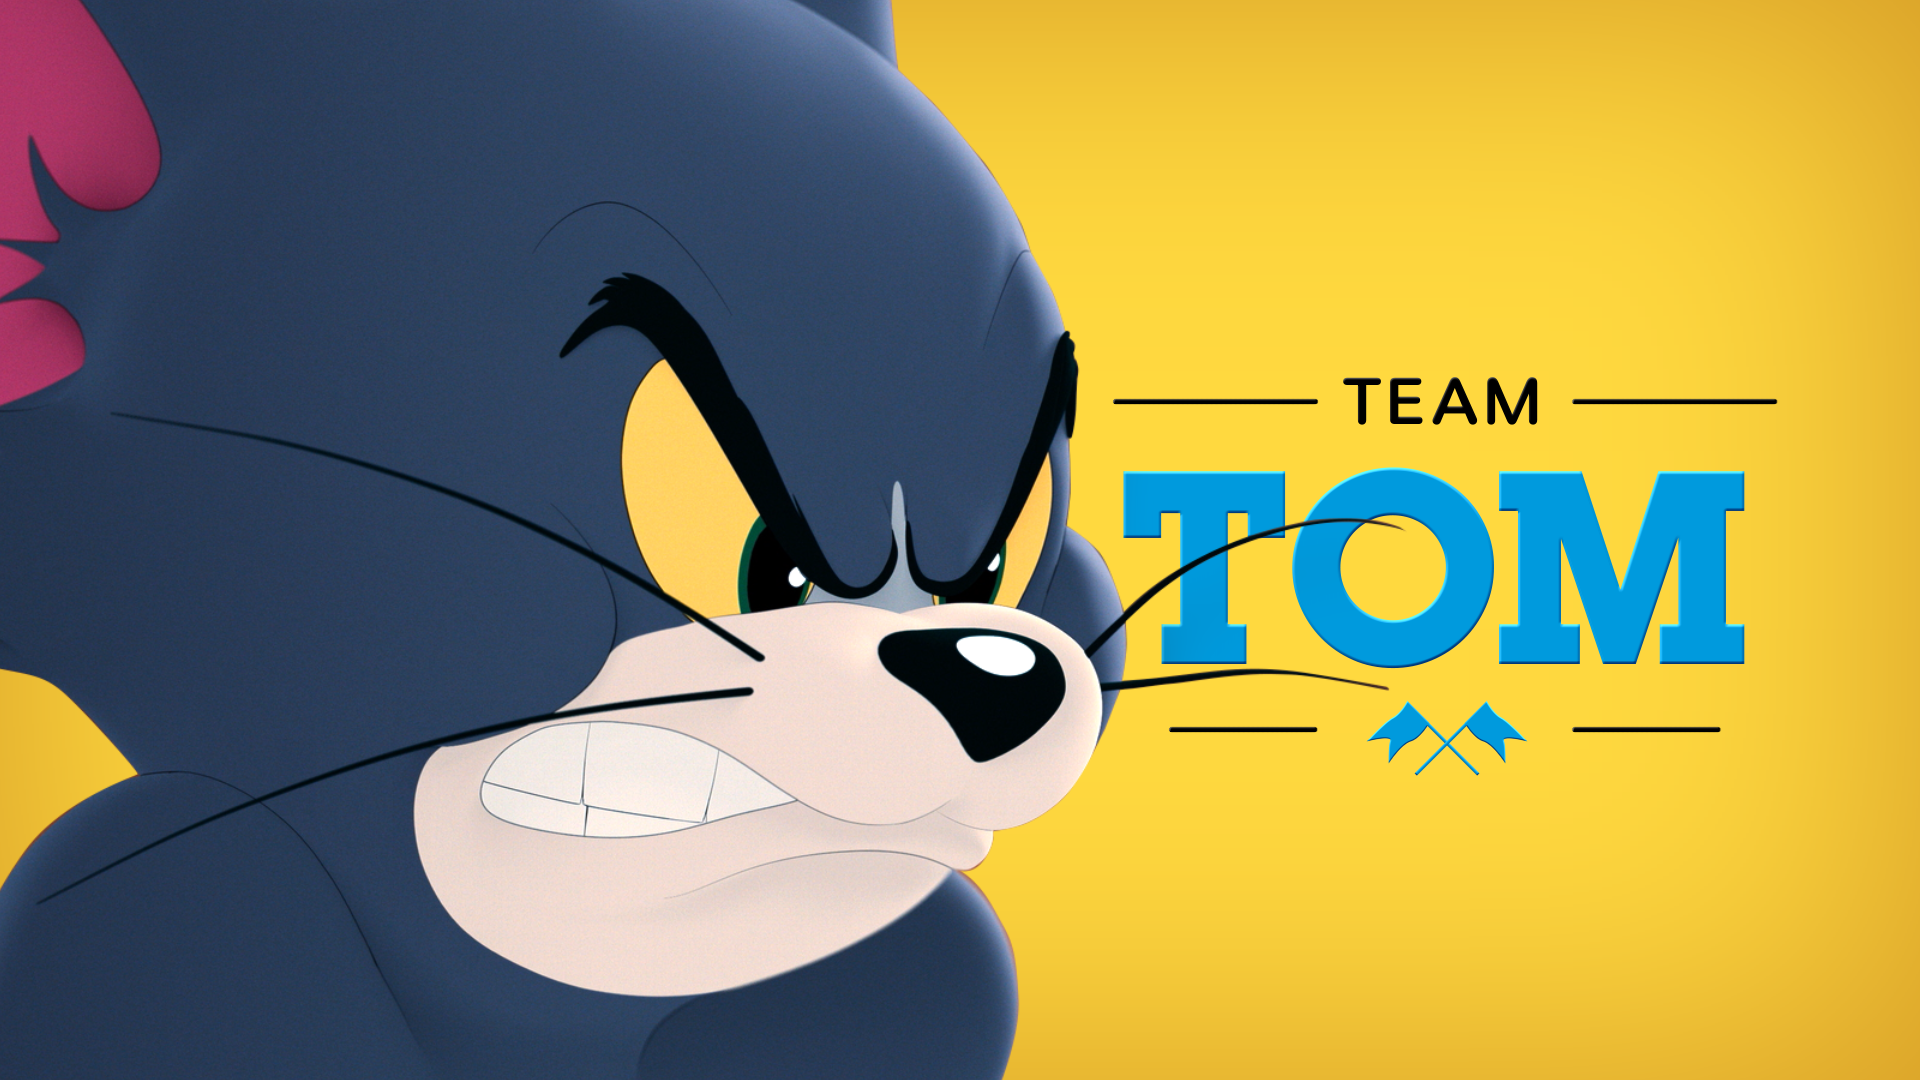 Tom & Jerry | Cartoon Network Movie Promo | Creative Mammals